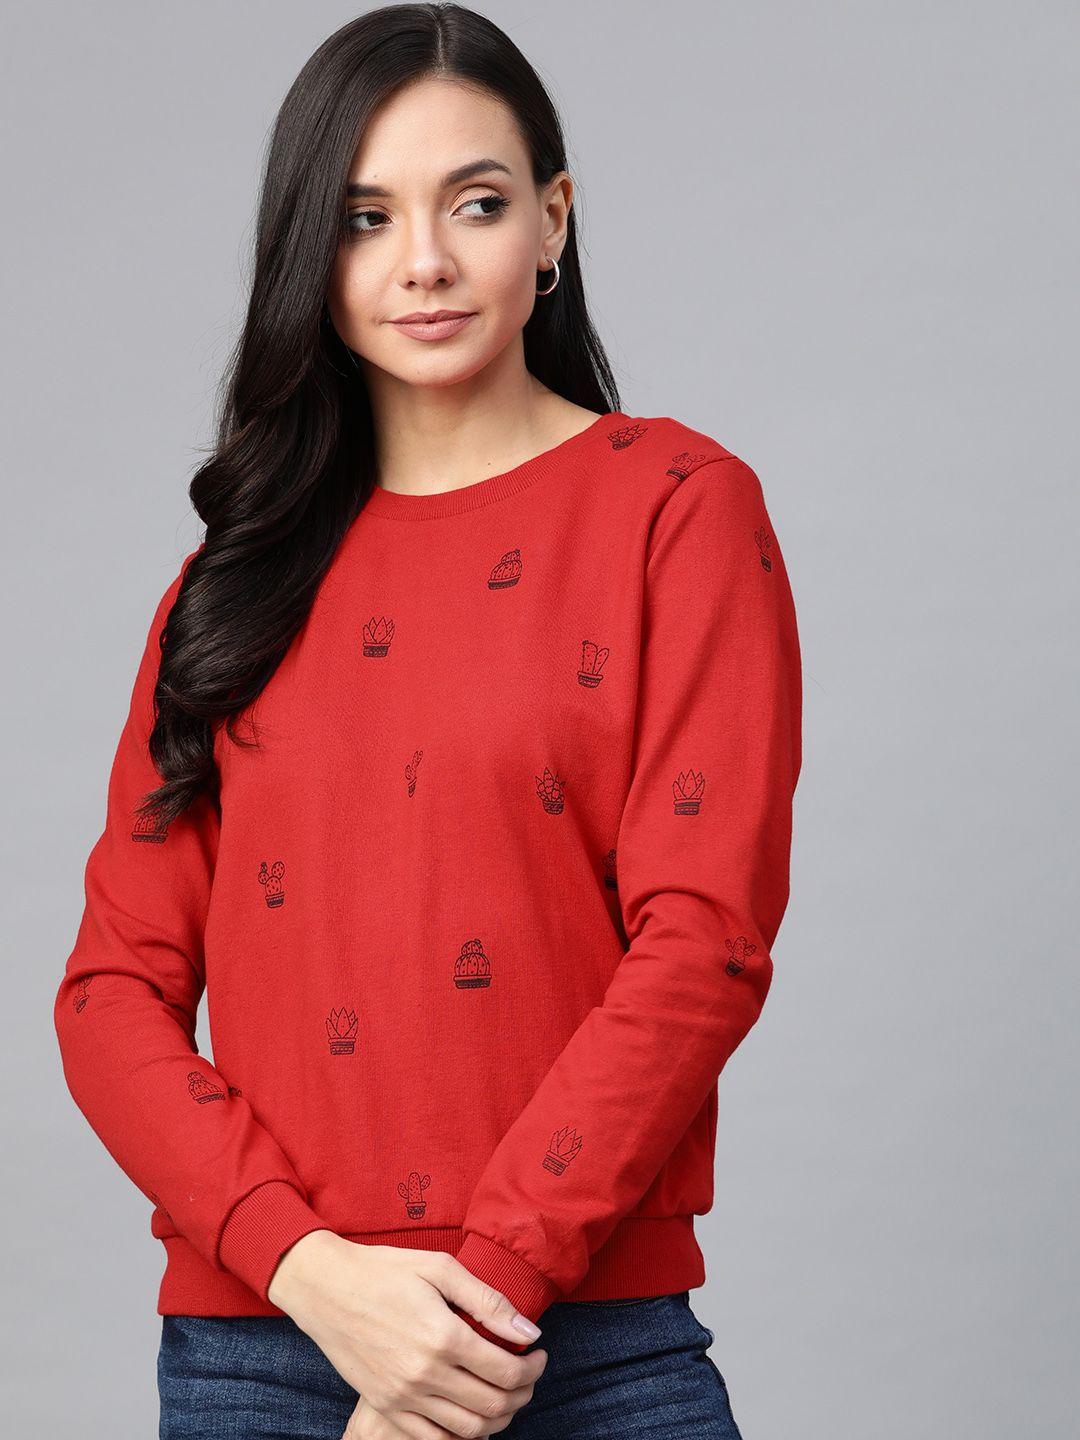 allen solly woman red & black conversational print sweatshirt